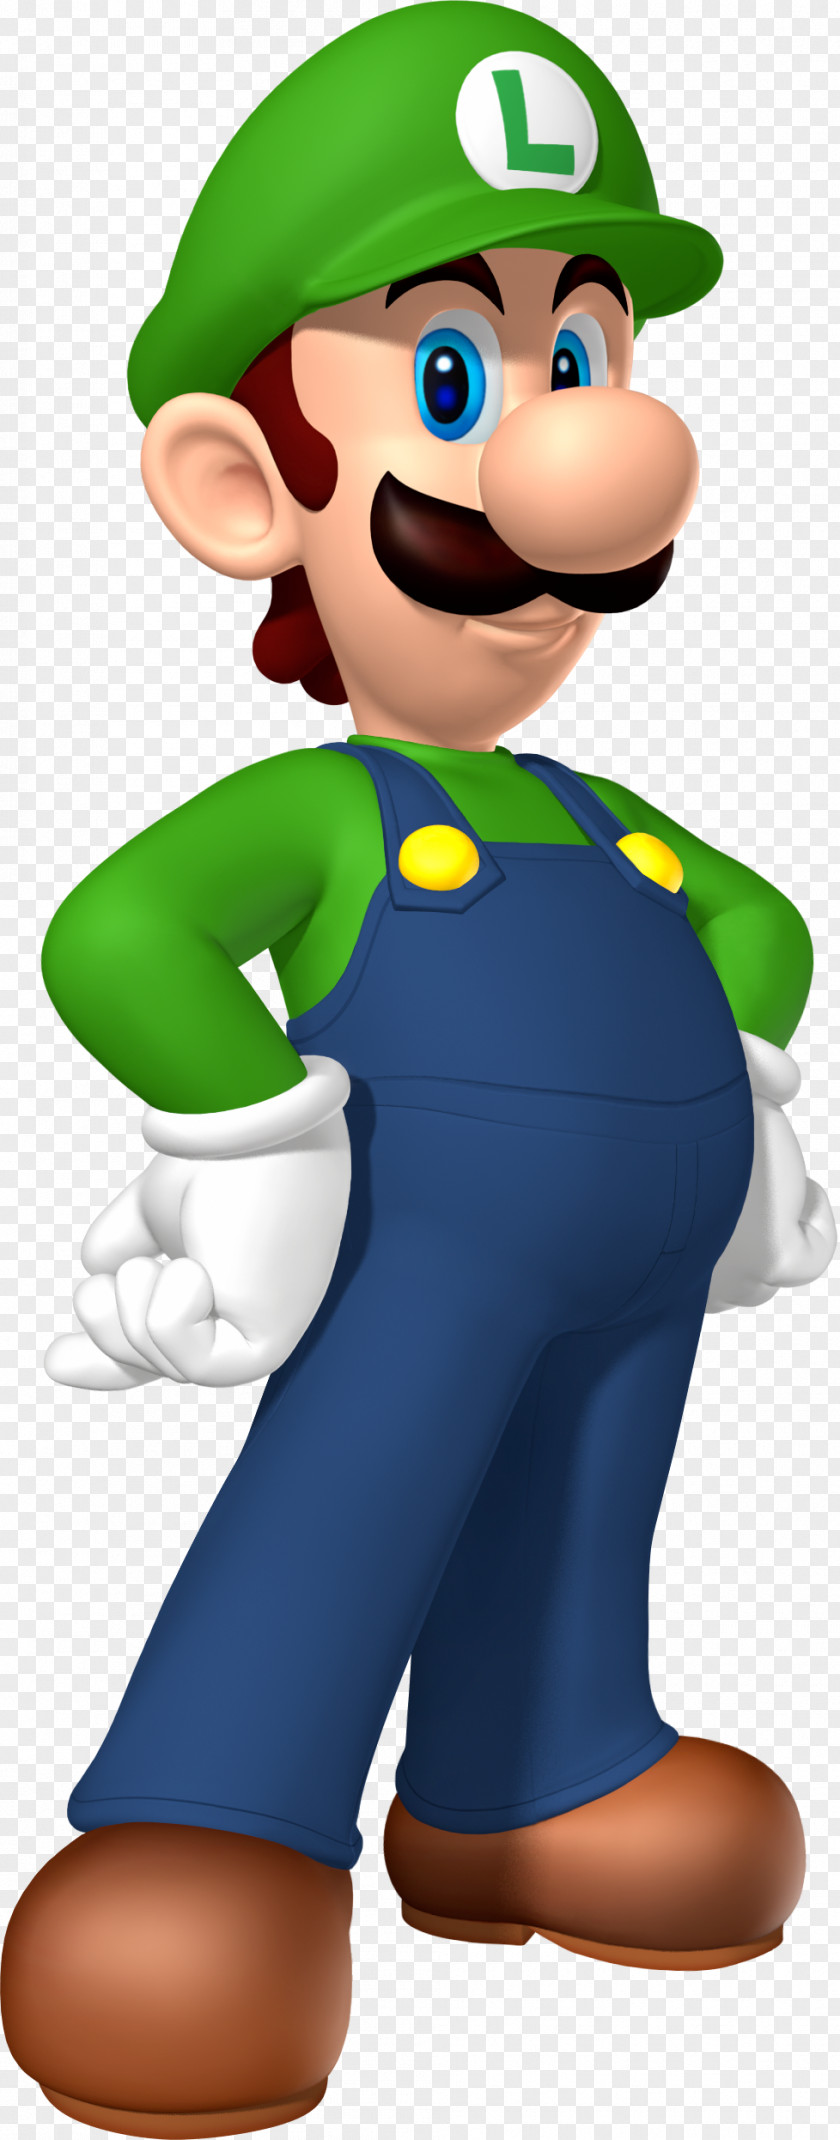 Luigi Image New Super Mario Bros. U Smash For Nintendo 3DS And Wii Luigis Mansion 2 PNG